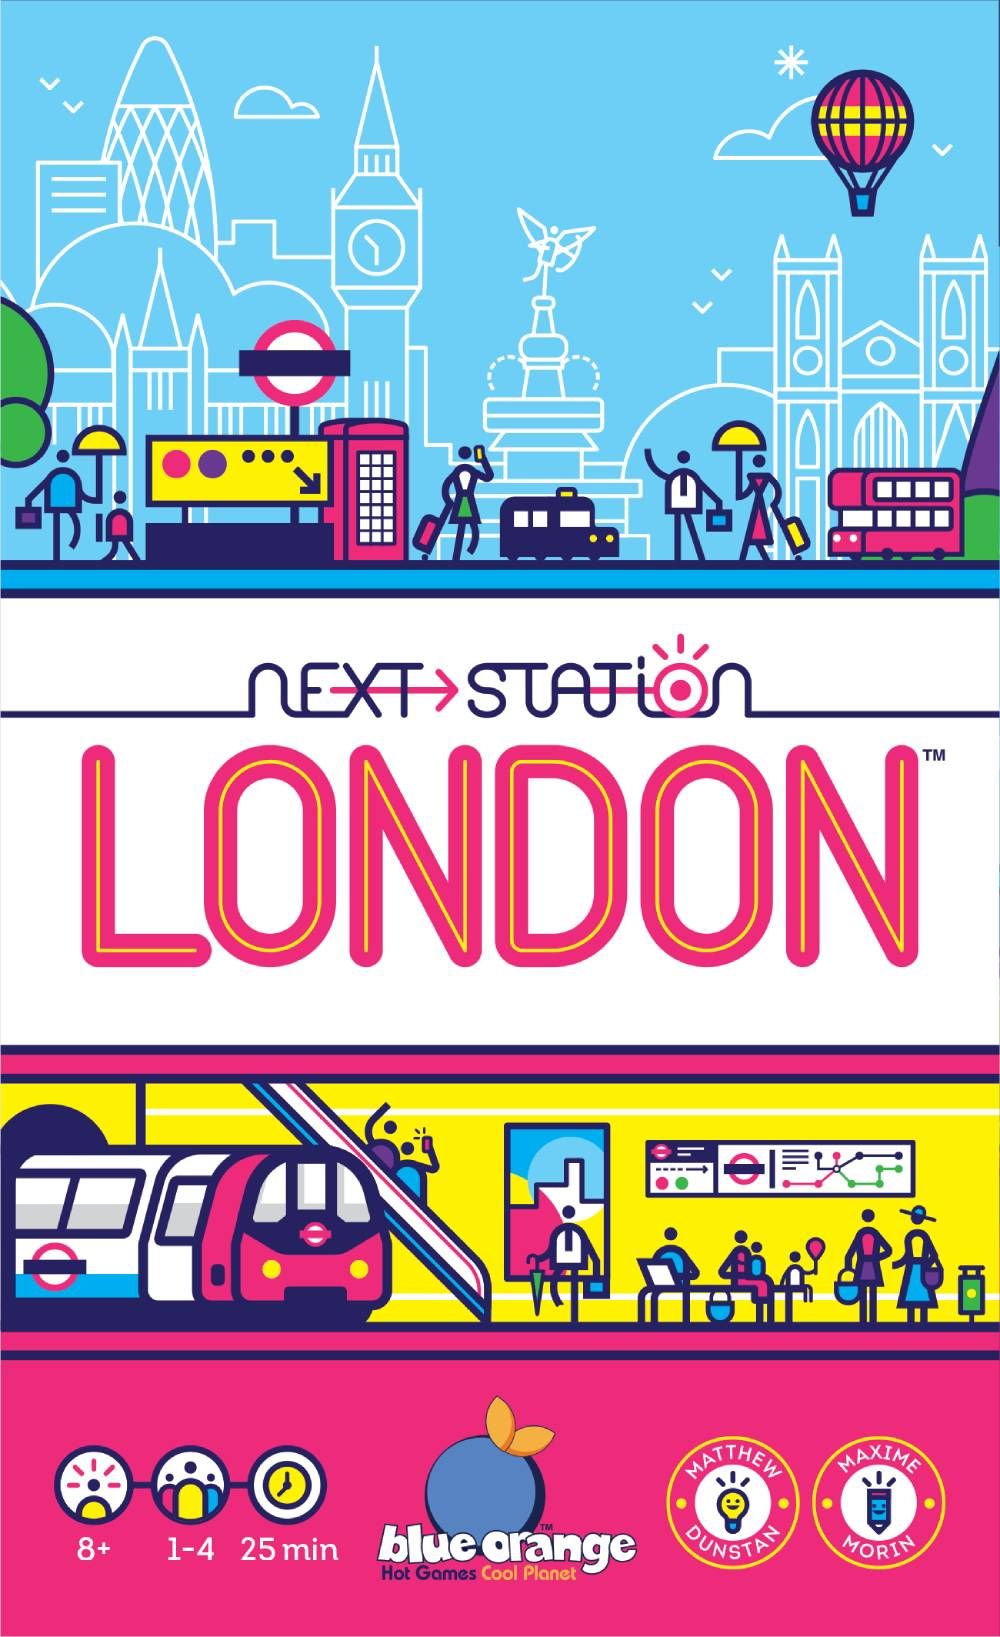 Next Station London - Blue Orange Games